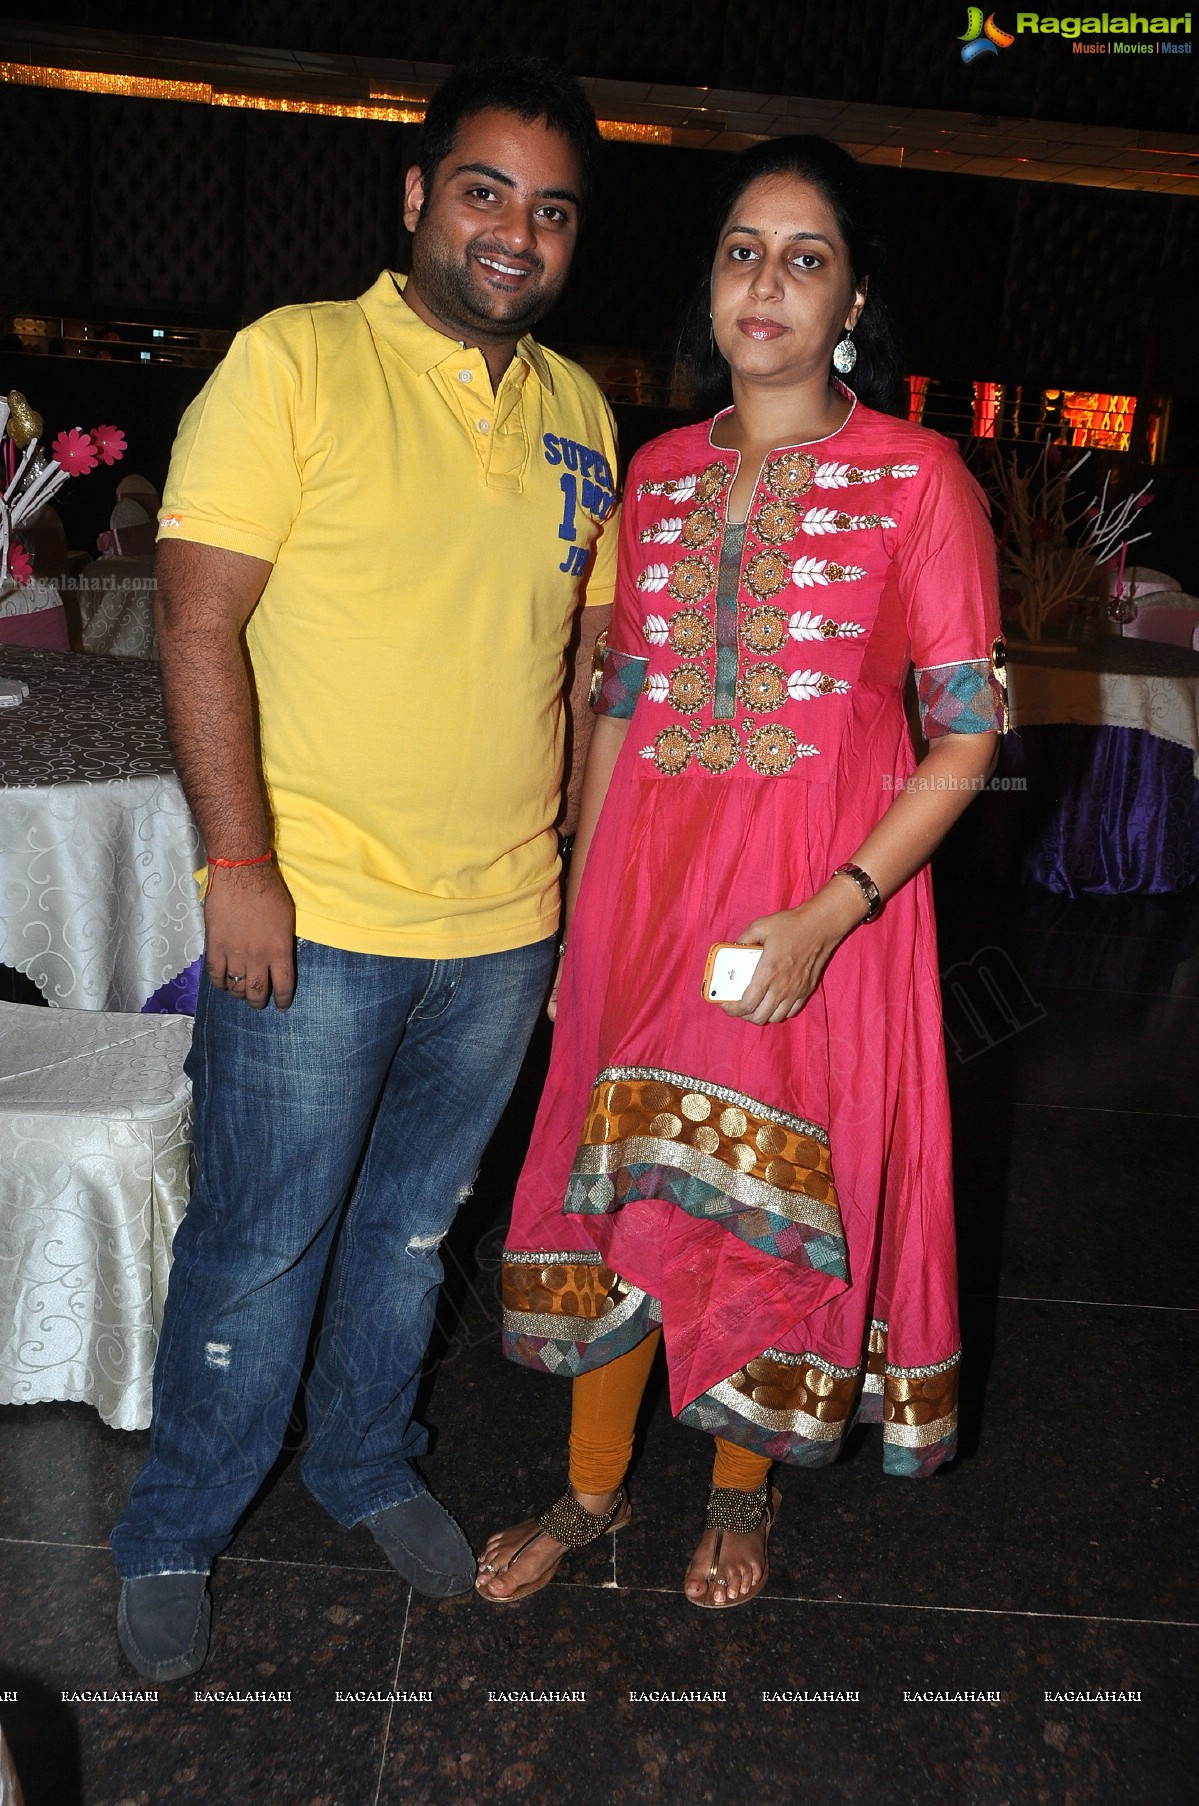 Baby Triaksha Teegala Birthday Party at N Convention, Hyd